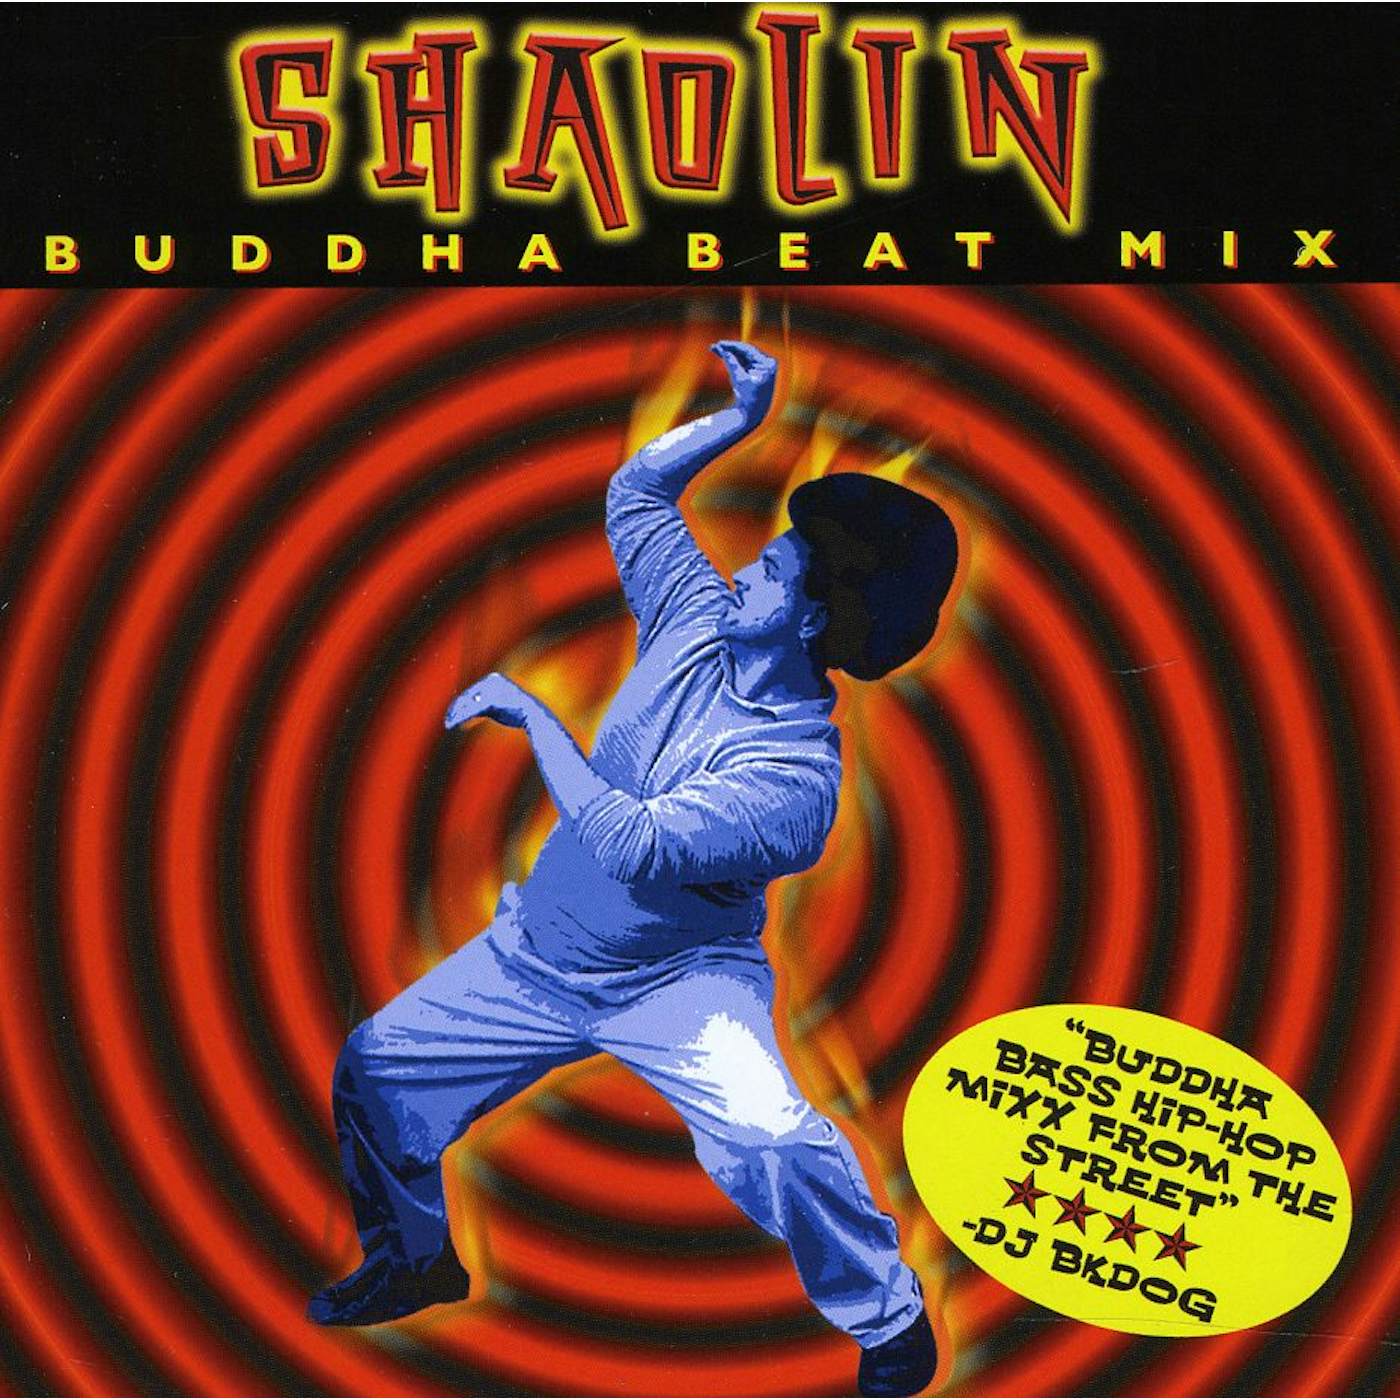 Paul Nice SHAOLIN BUDDHA BEAT MIX CD